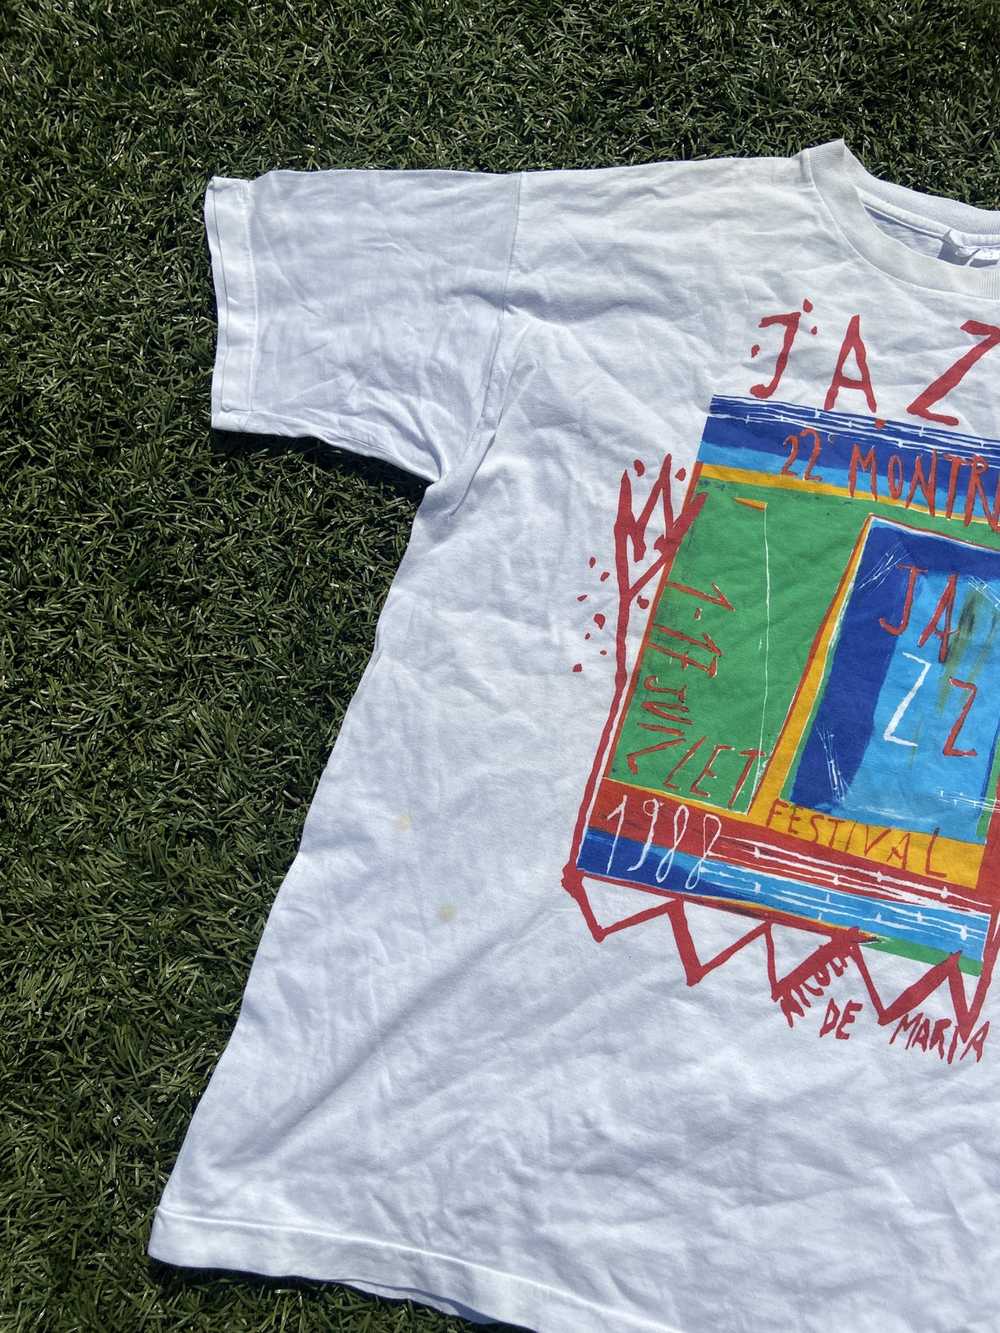 Vintage 1988 Jazz 1-17 Juliet Festival T shirt Tee - image 3